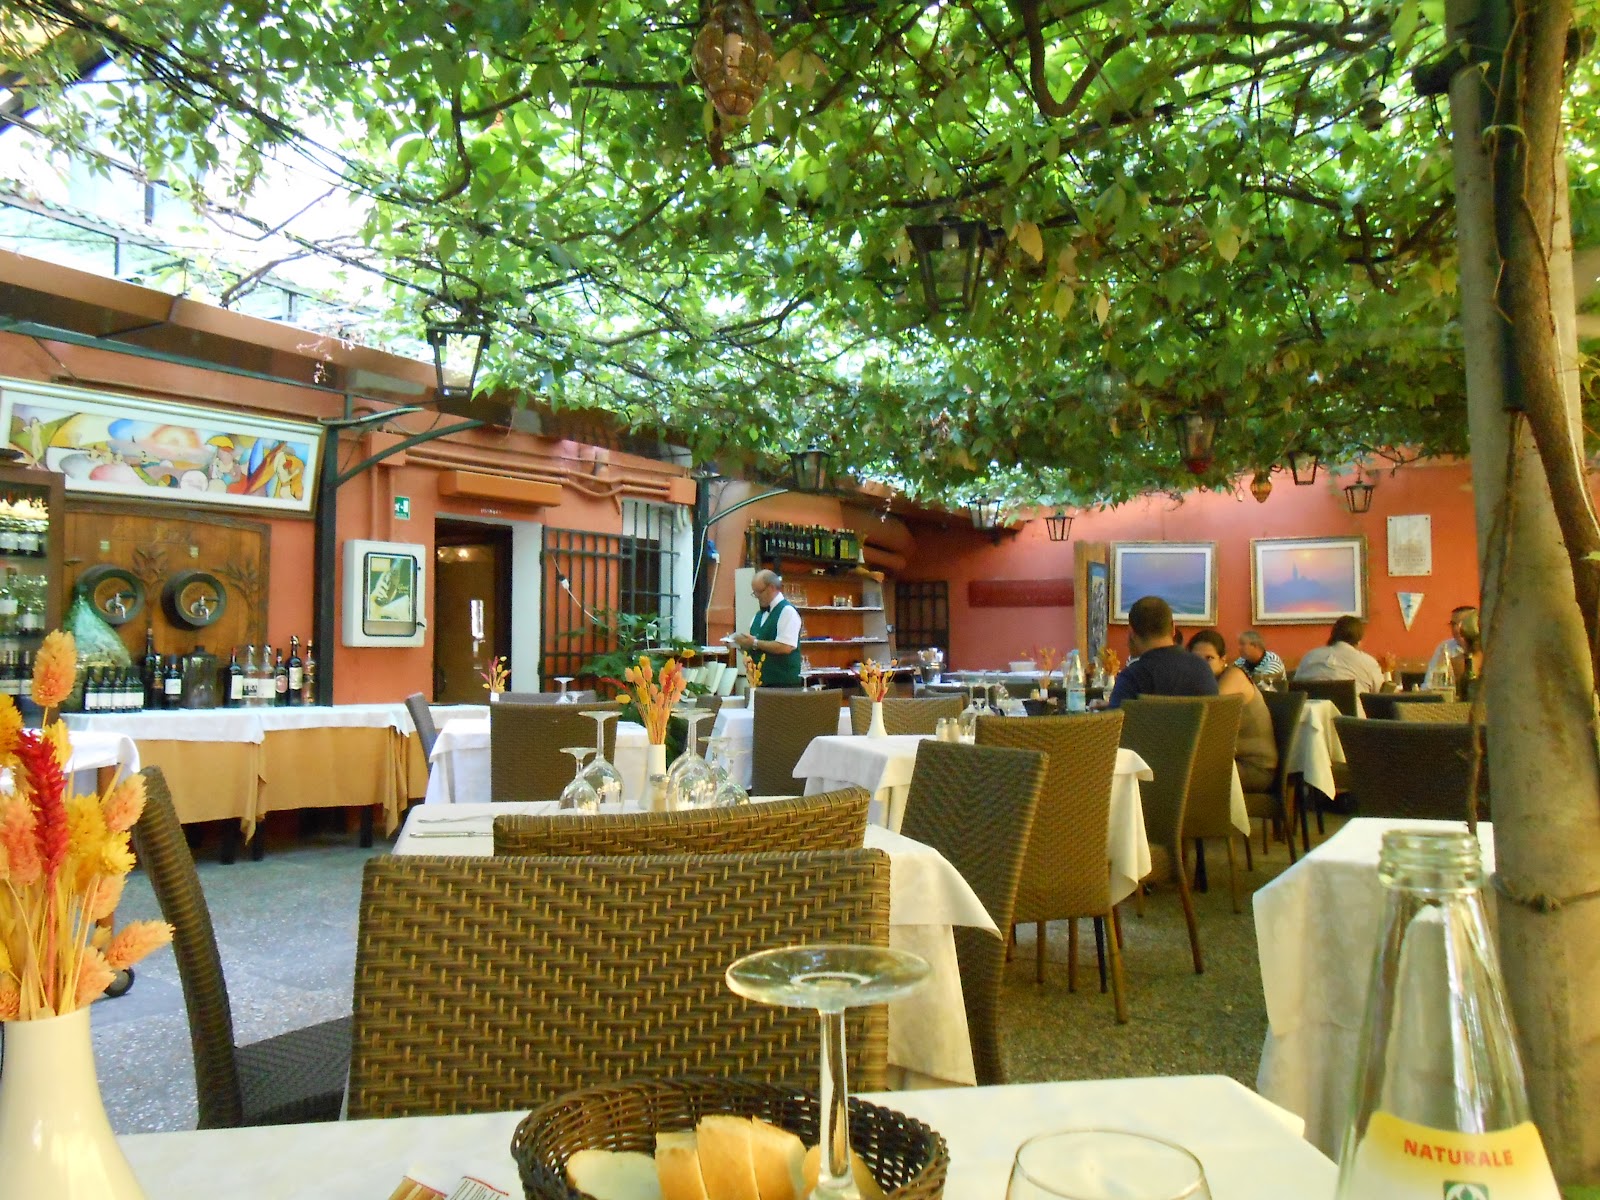 Al Giardinetto - a restaurant in a 15th century palace garden